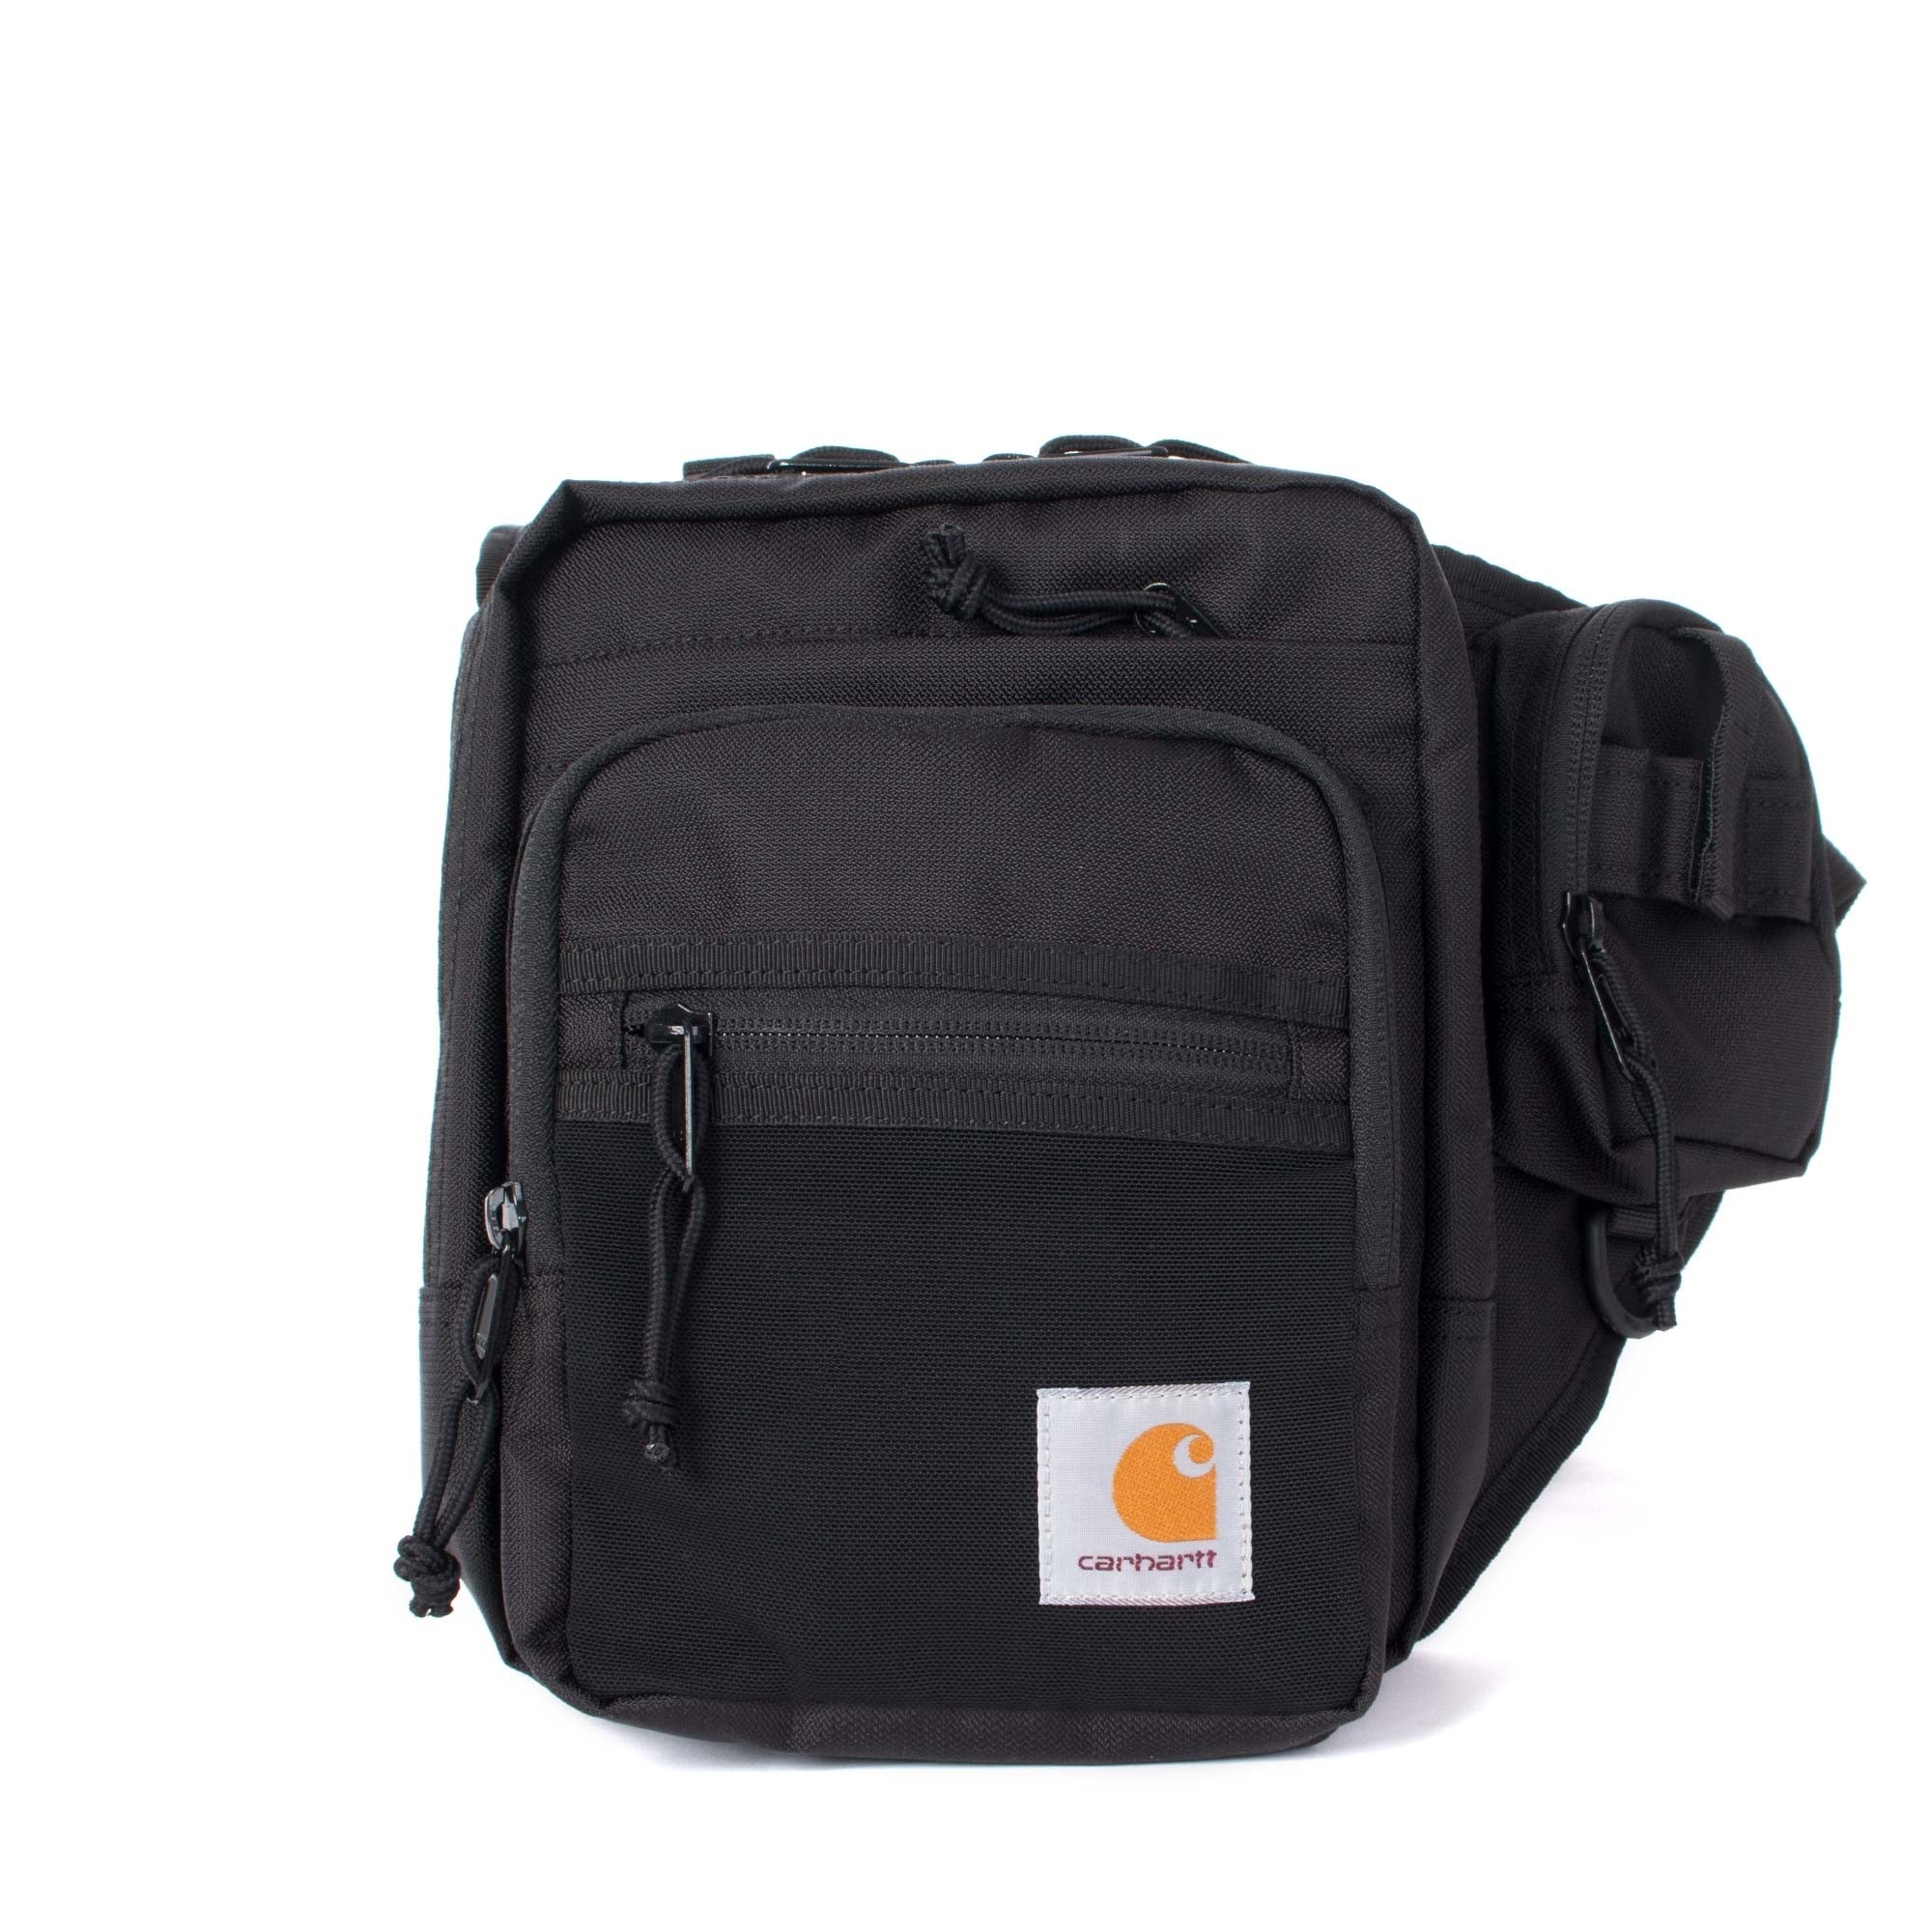 Carhartt WIP, Bags, Carhartt Delta Wip Shoulder Bag Black